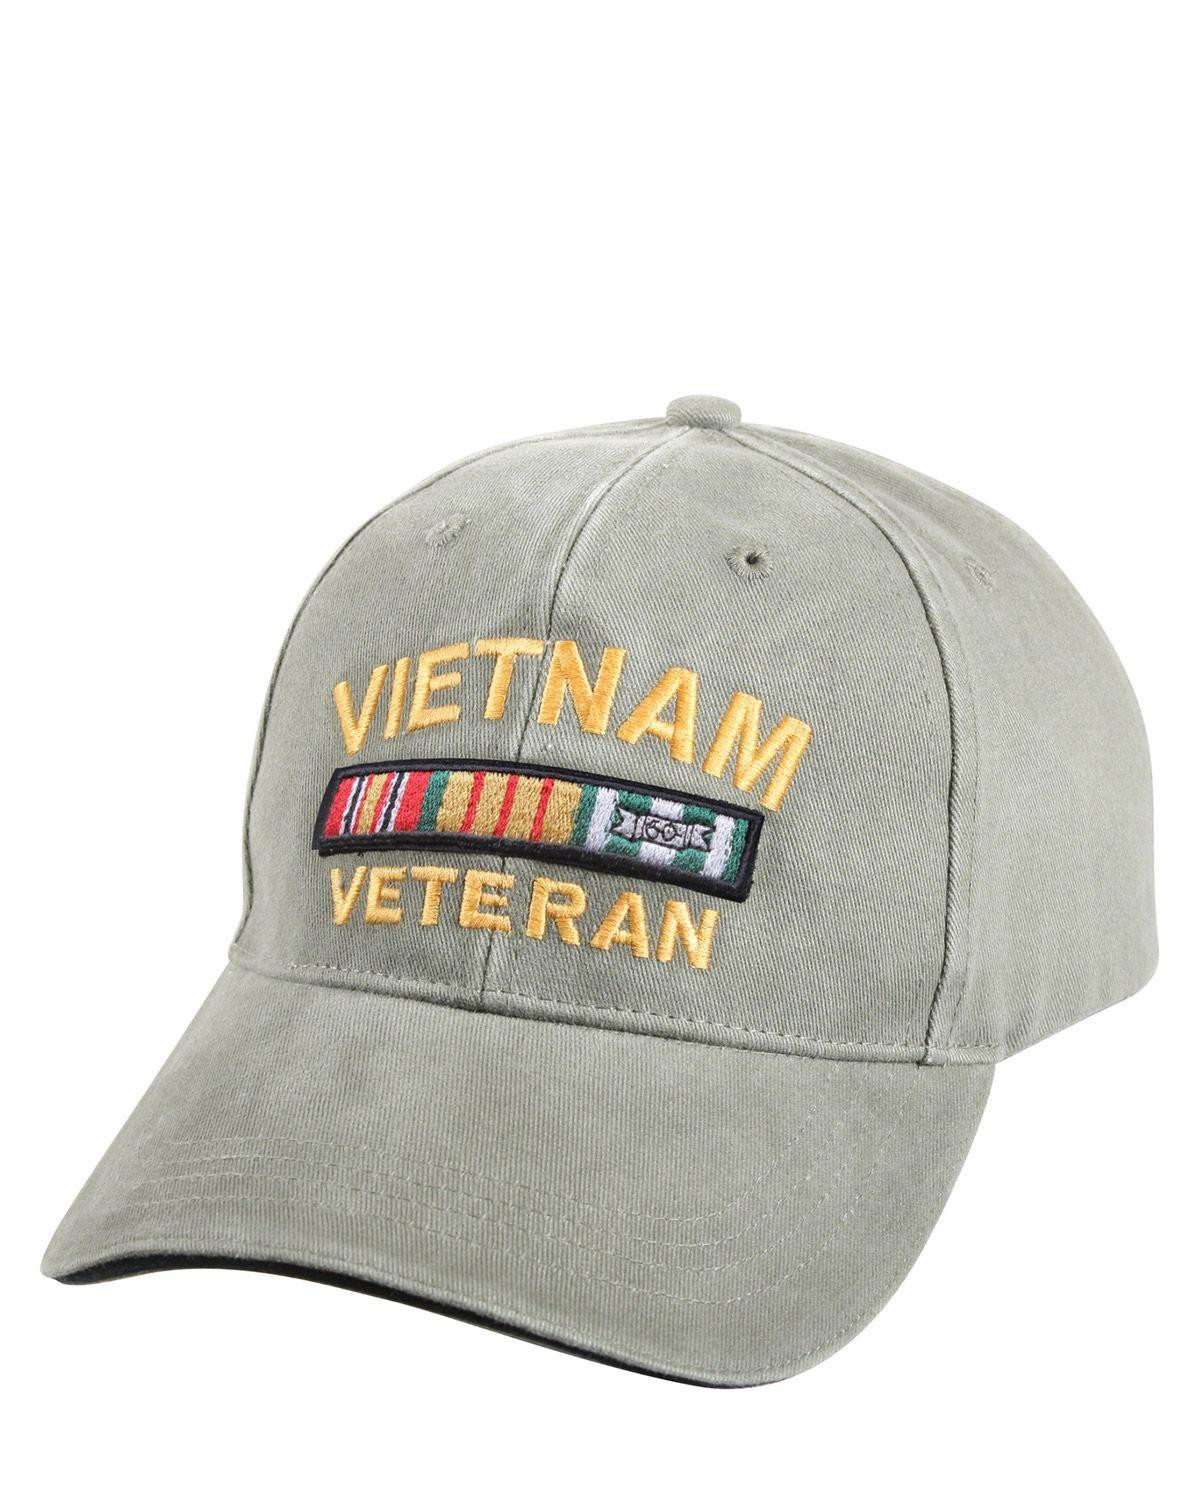 Rothco Deluxe Vintage Baseball Cap - Vietnam Veteran (Oliven m. Vietnam Veteran, One Size)